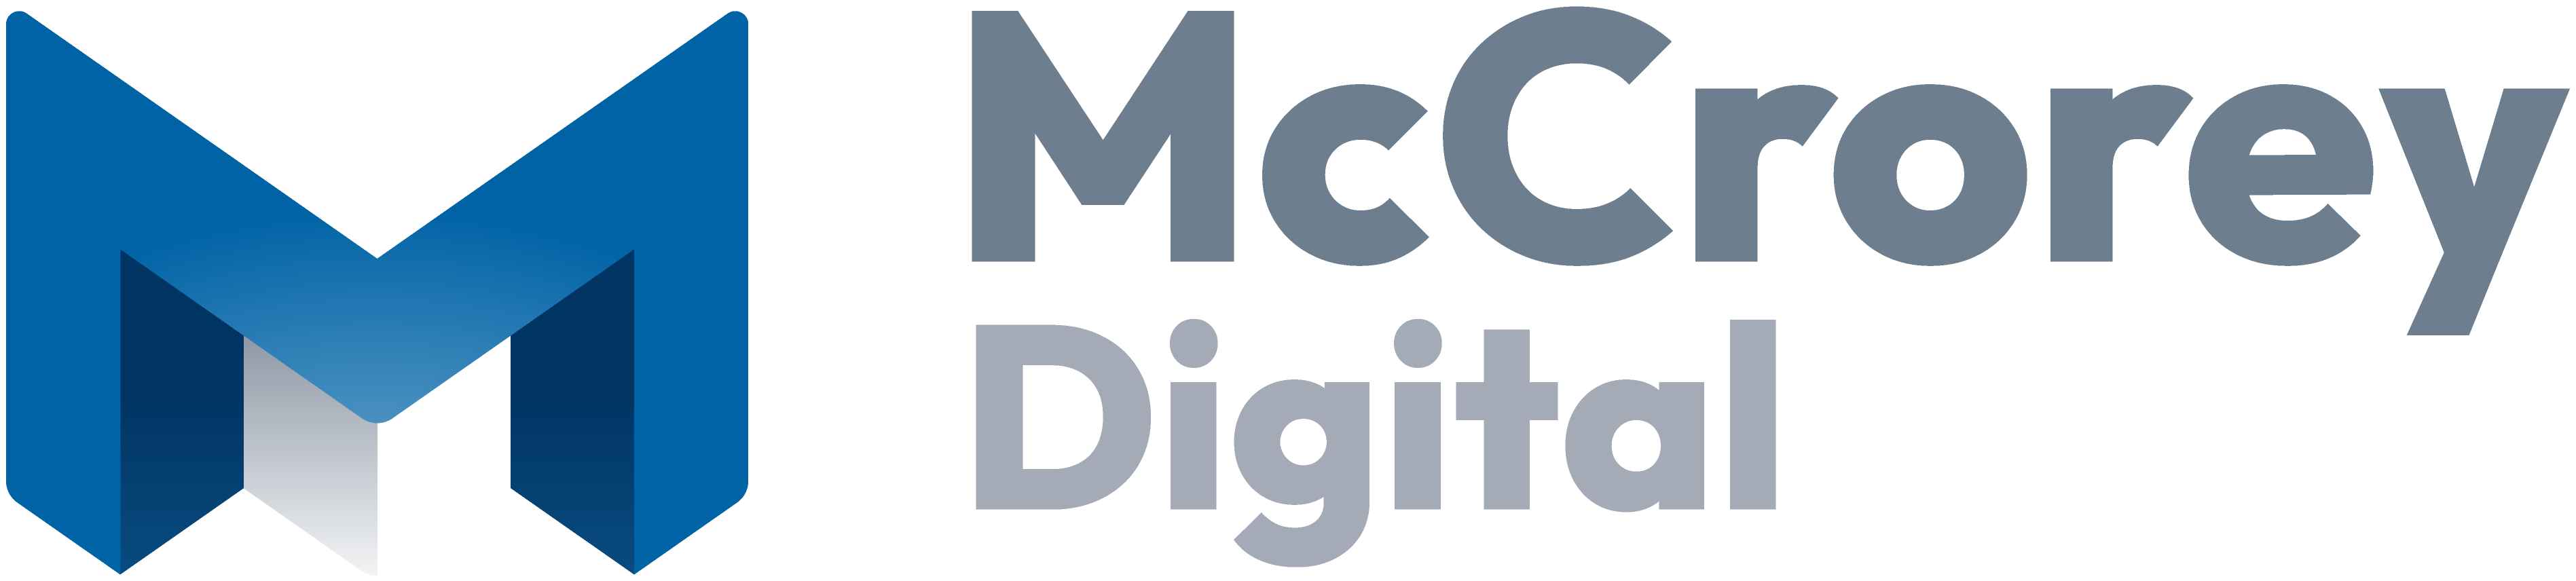 McCrorey Digital